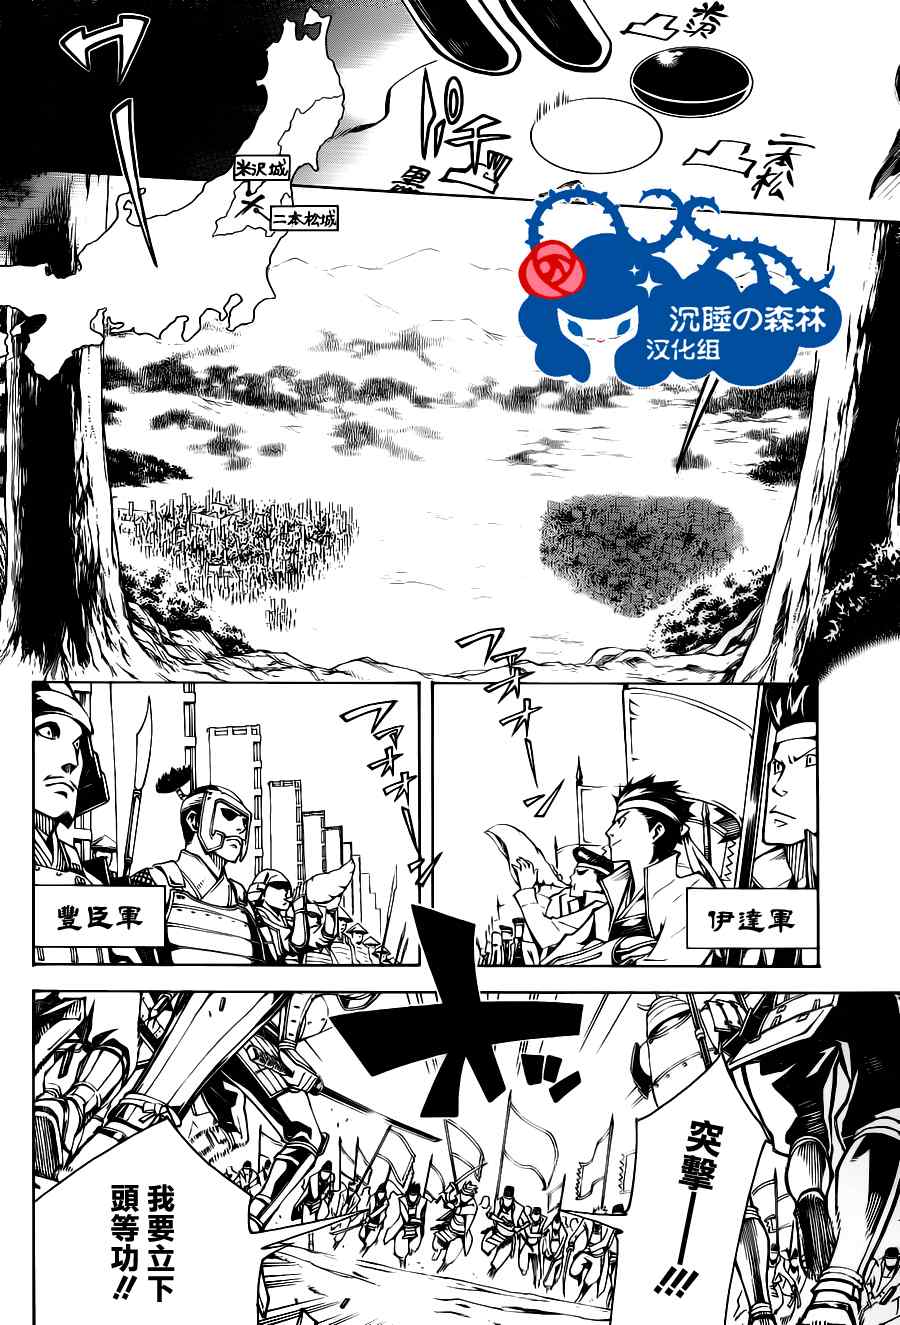 《战国BASARA3》漫画 战国basara3 02集